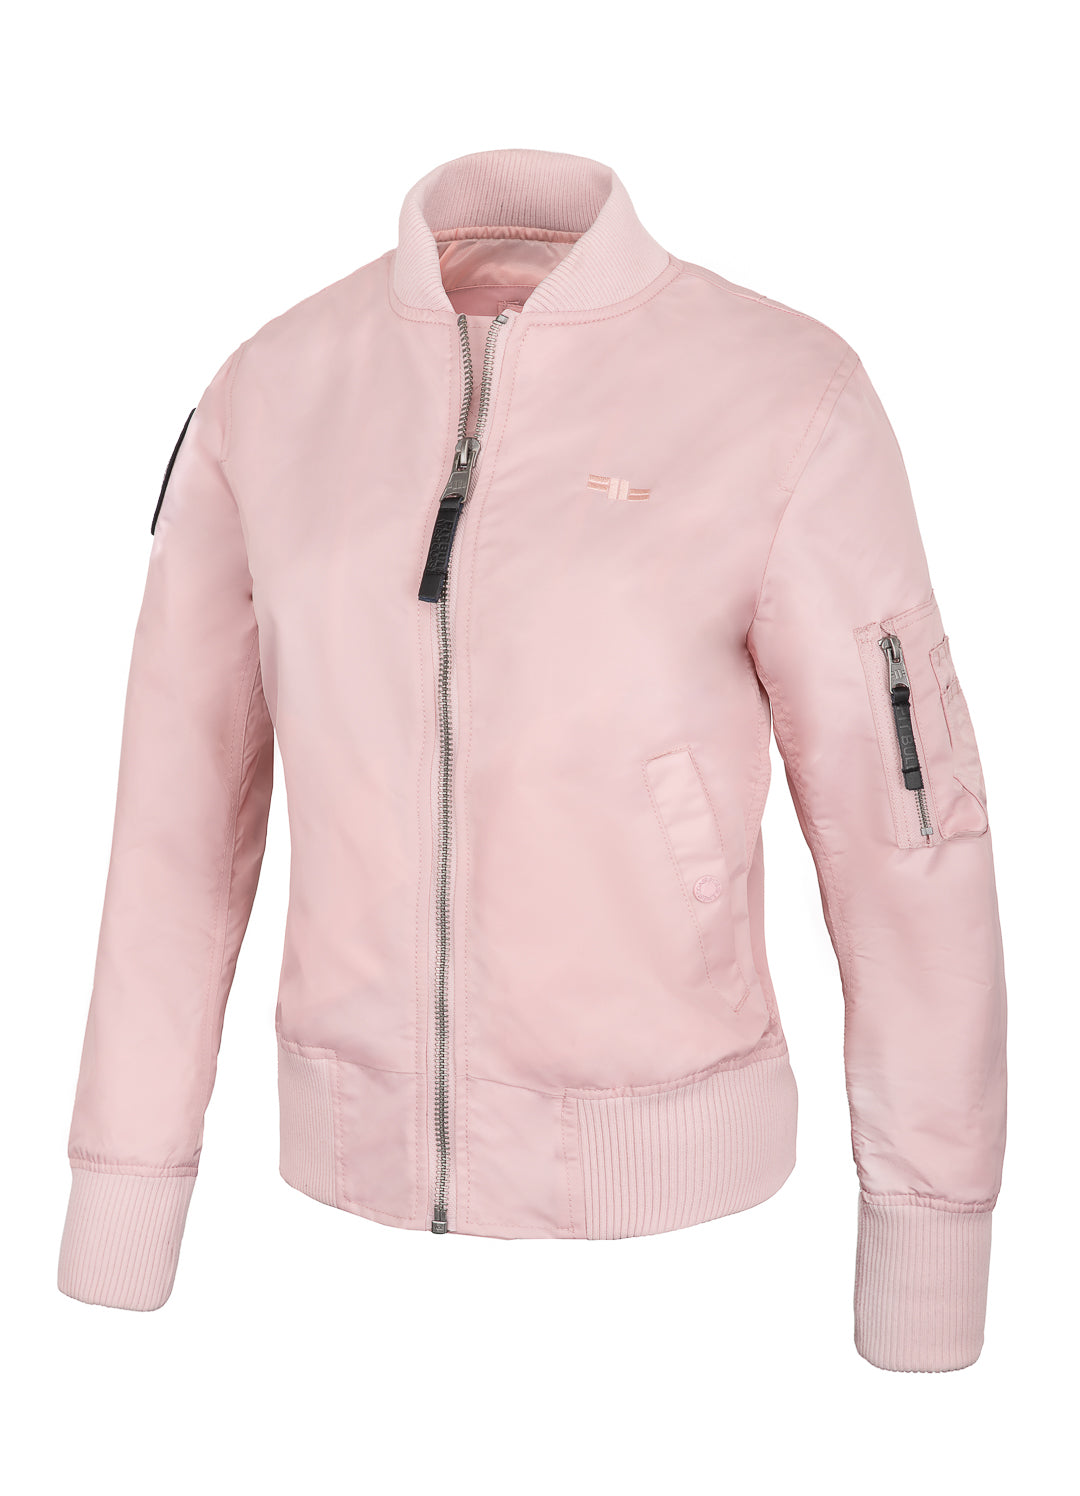 GENESSE 2 Pink Jacket.